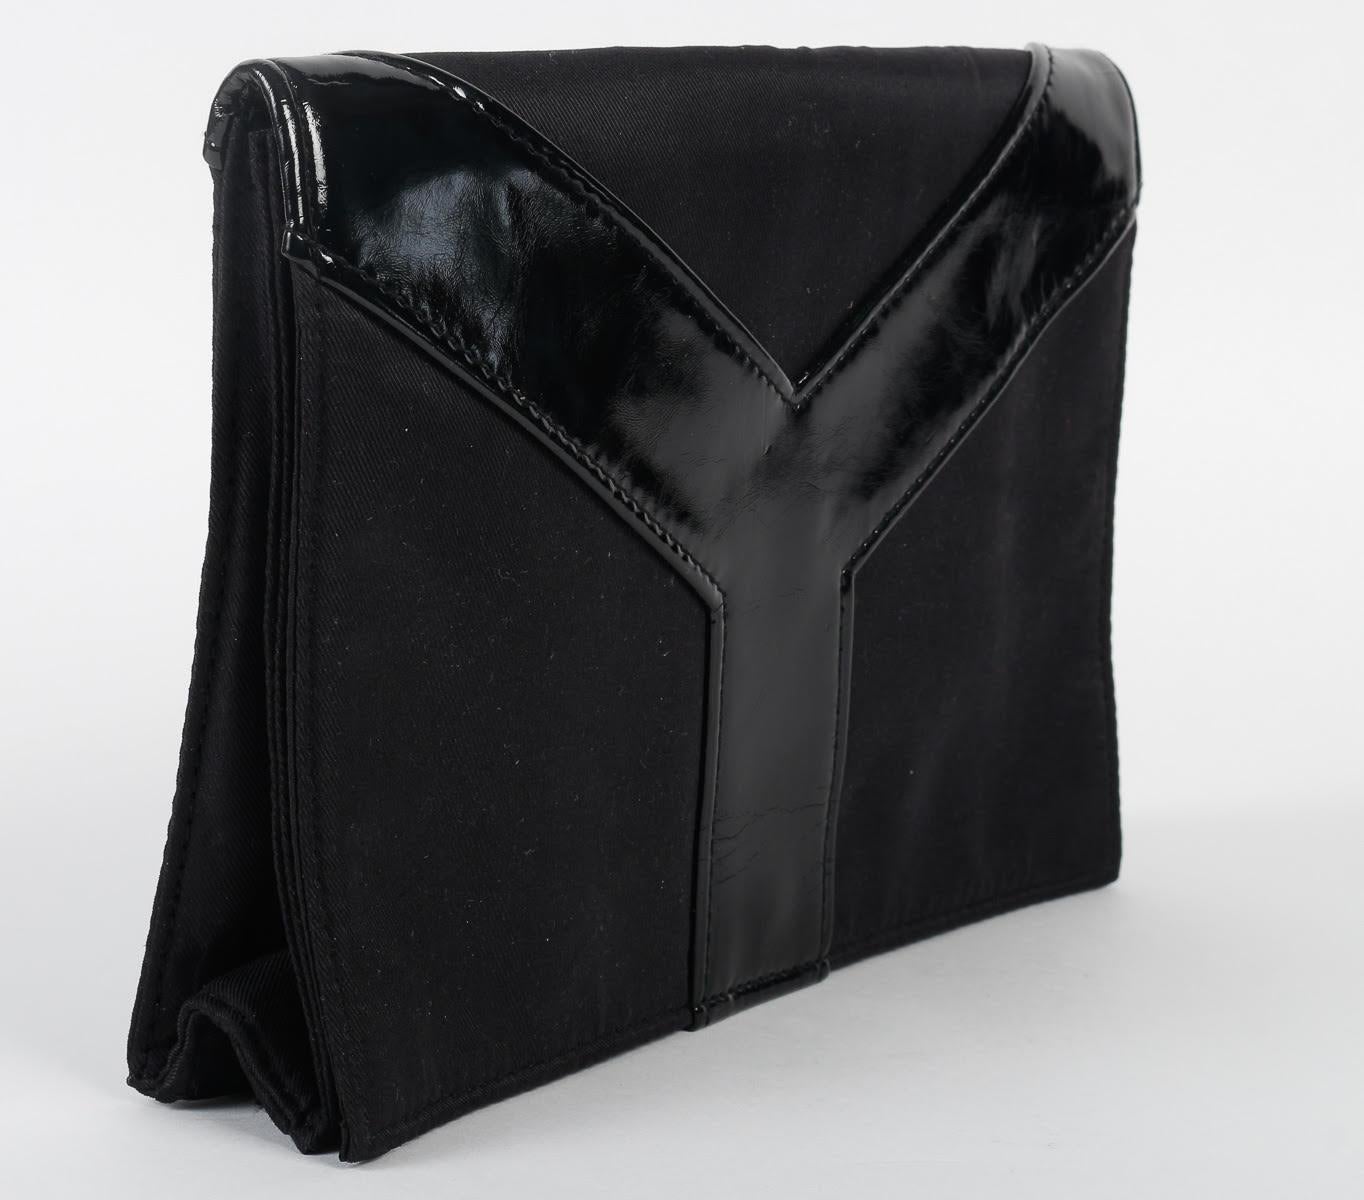 Vintage Yves Saint-Laurent clutch bag, Black leather, 20th century.

Yves Saint-Laurent clutch bag, Y logo in leather, mirror inside, black leather, good condition, 20th century.    
h: 16cm , w: 22cm, d: 4cm